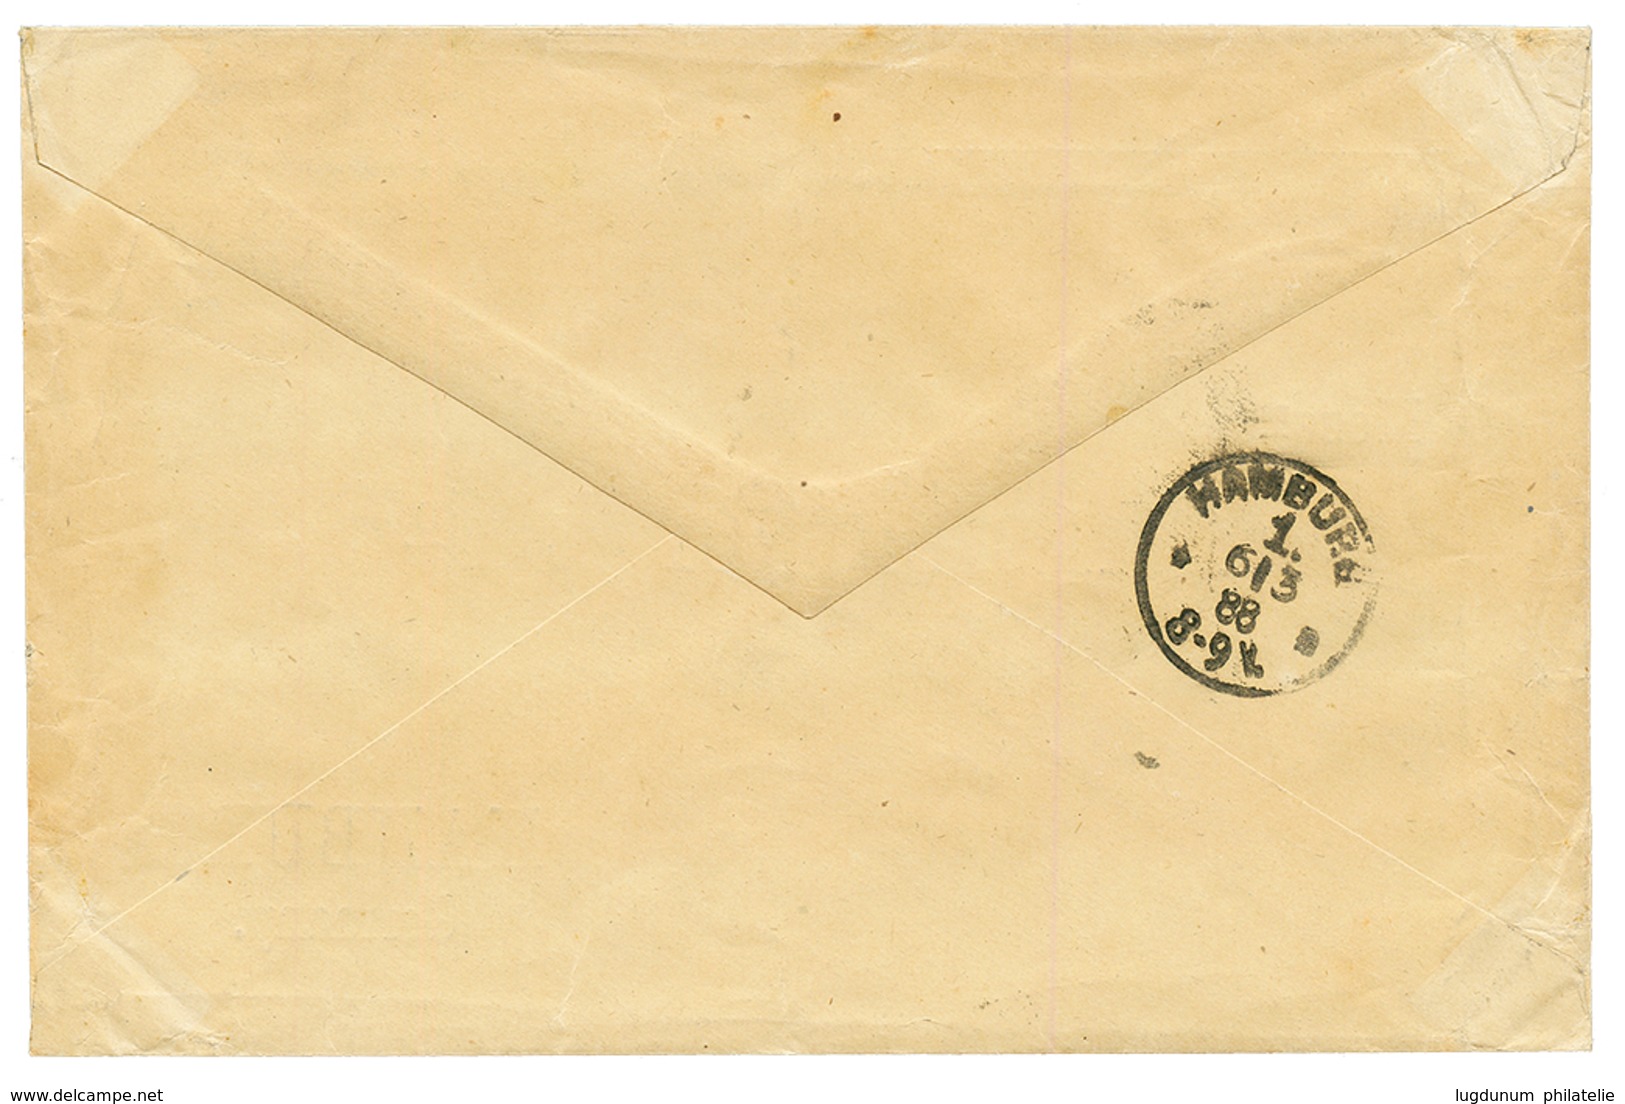 HAITI : 1888 3c + 7c+ 20c Canc. JACMEL On Envelope To GERMANY. Ex. SABATTINI. Vf. - Haití